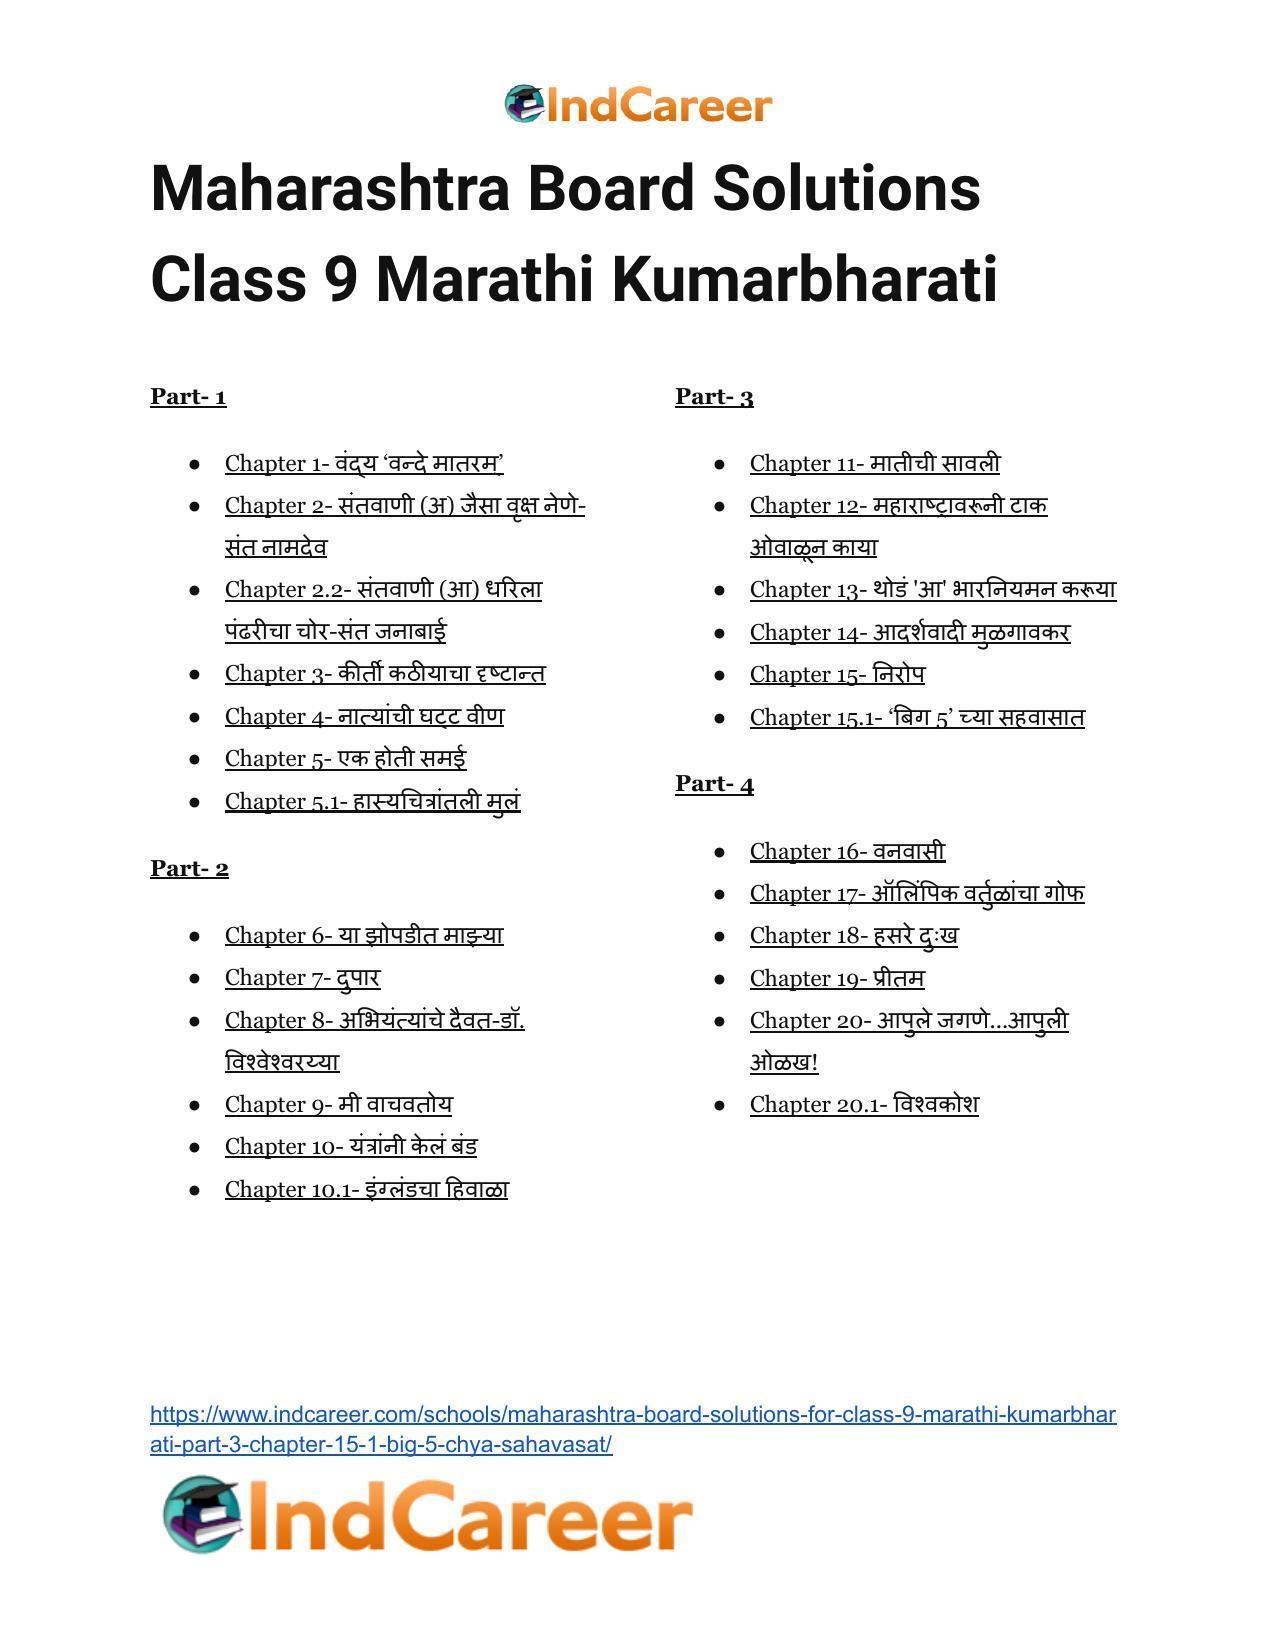 Maharashtra Board Solutions for Class 9- Marathi Kumarbharati (Part- 3): Chapter 15.1- ‘बिग 5’ च्या सहवासात - Page 8